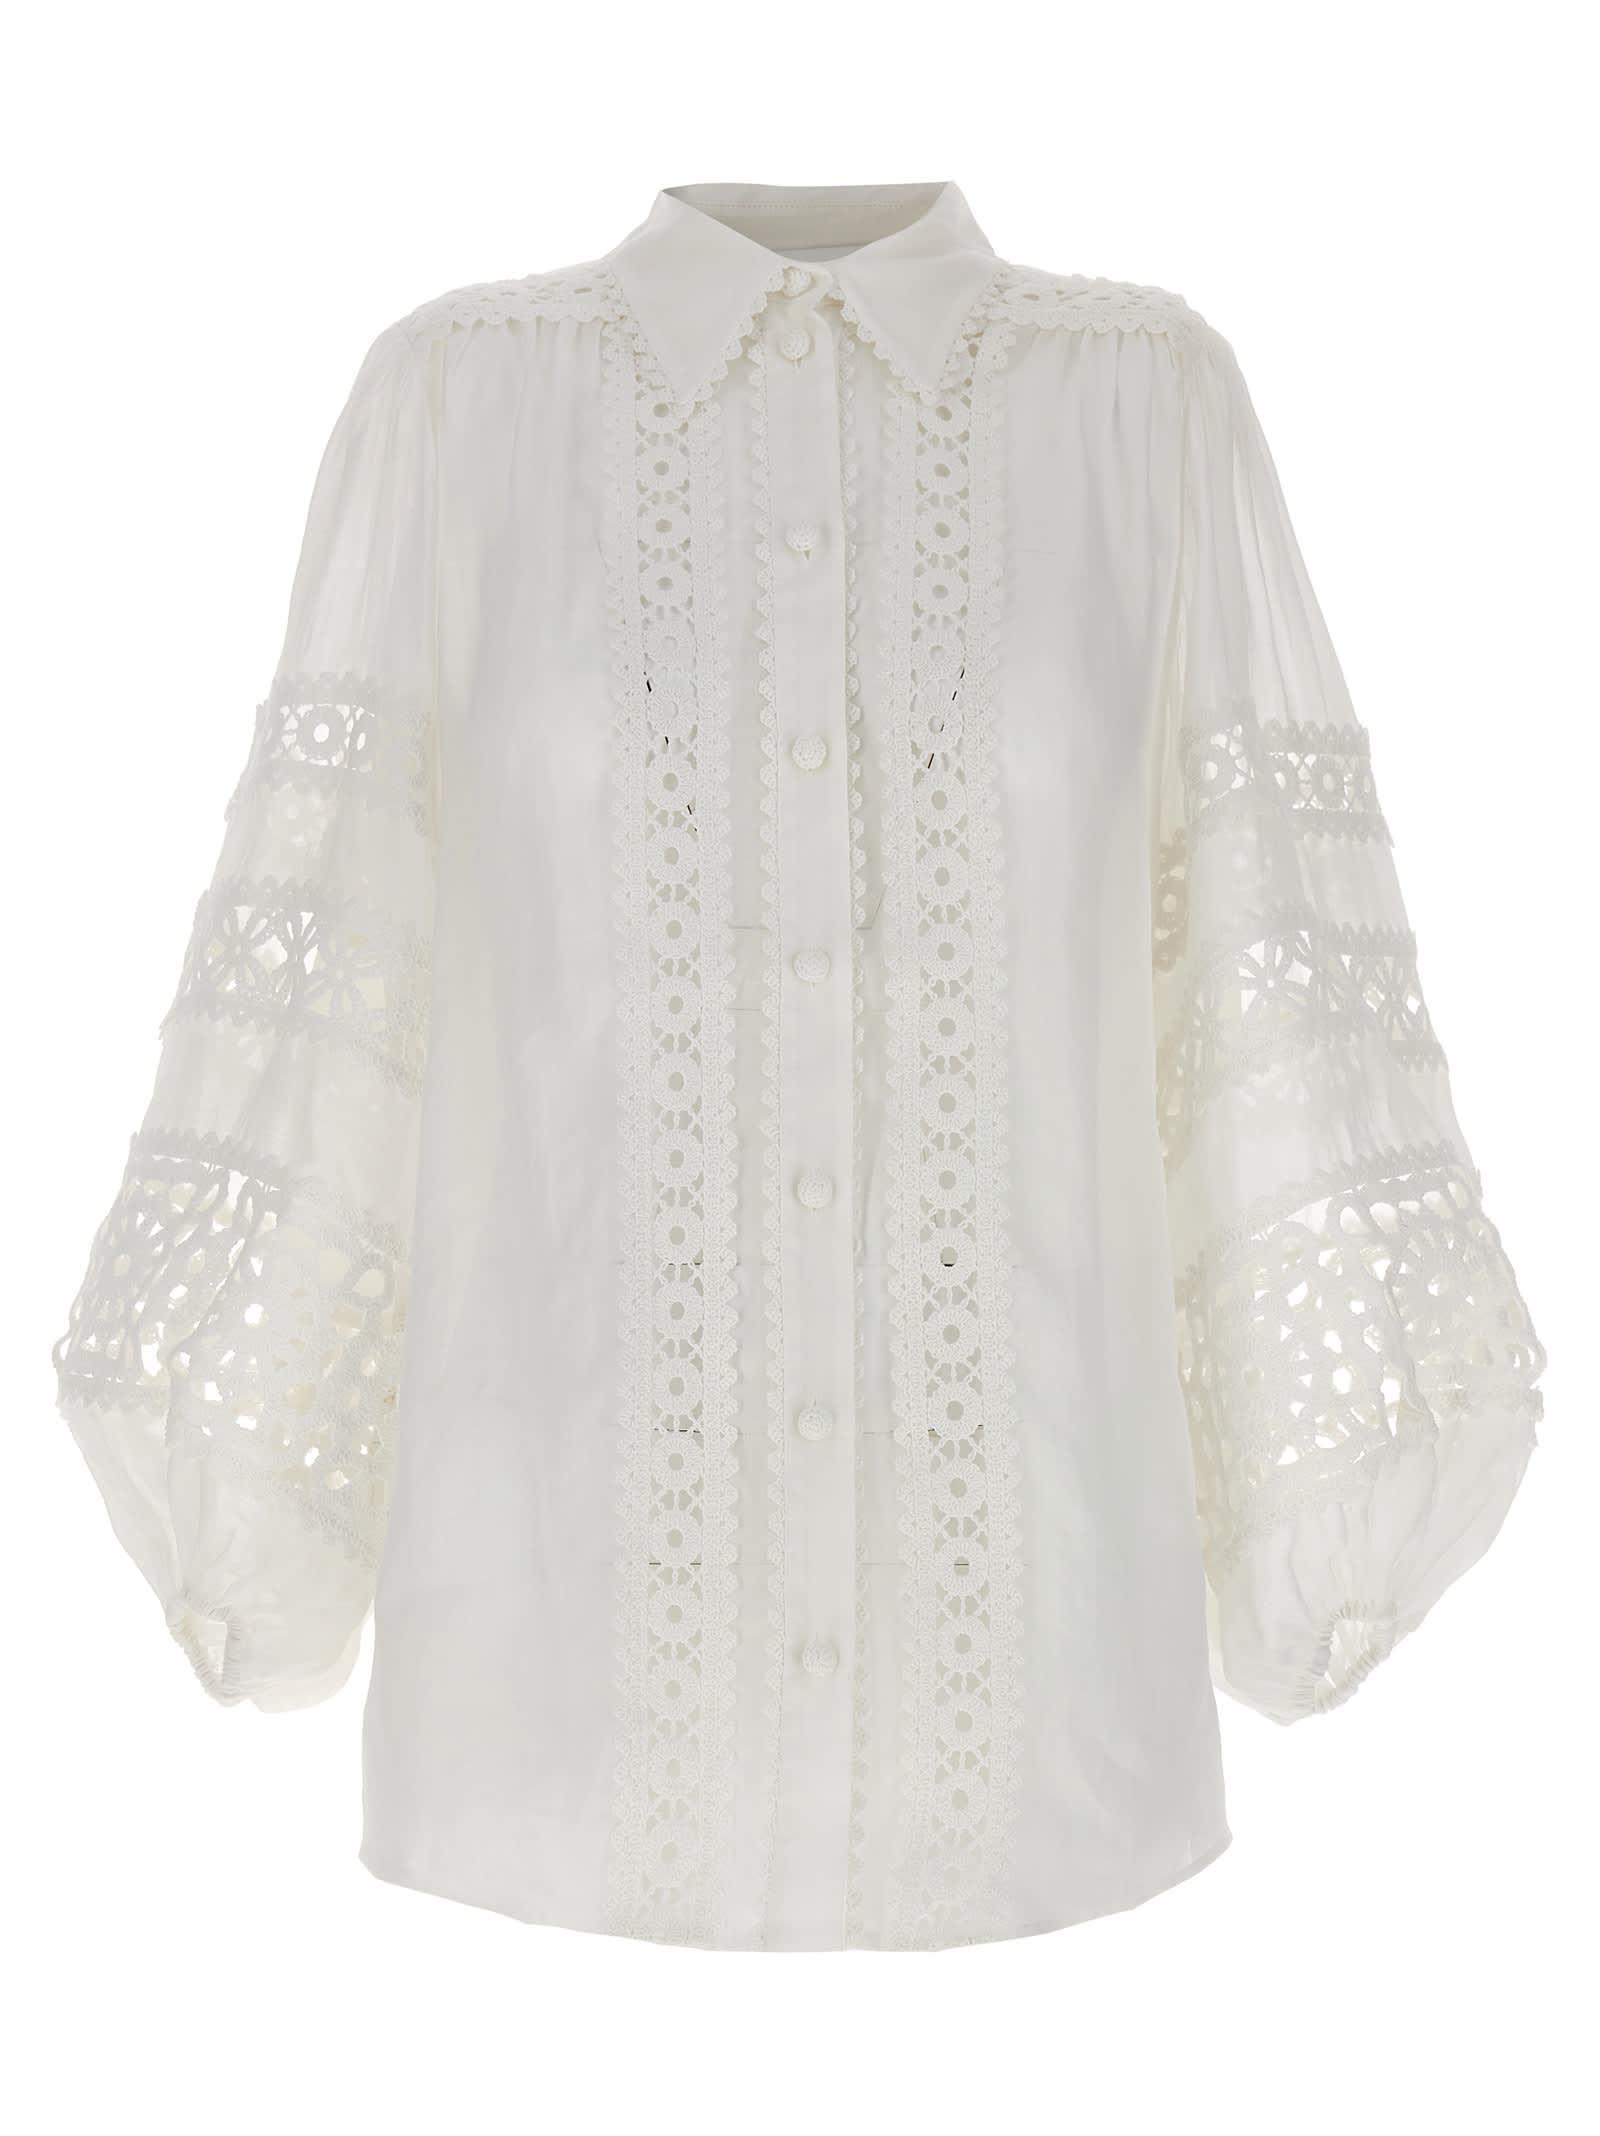 Zimmermann Devi S Accessory Billow Shirt, Blouse in White | Lyst